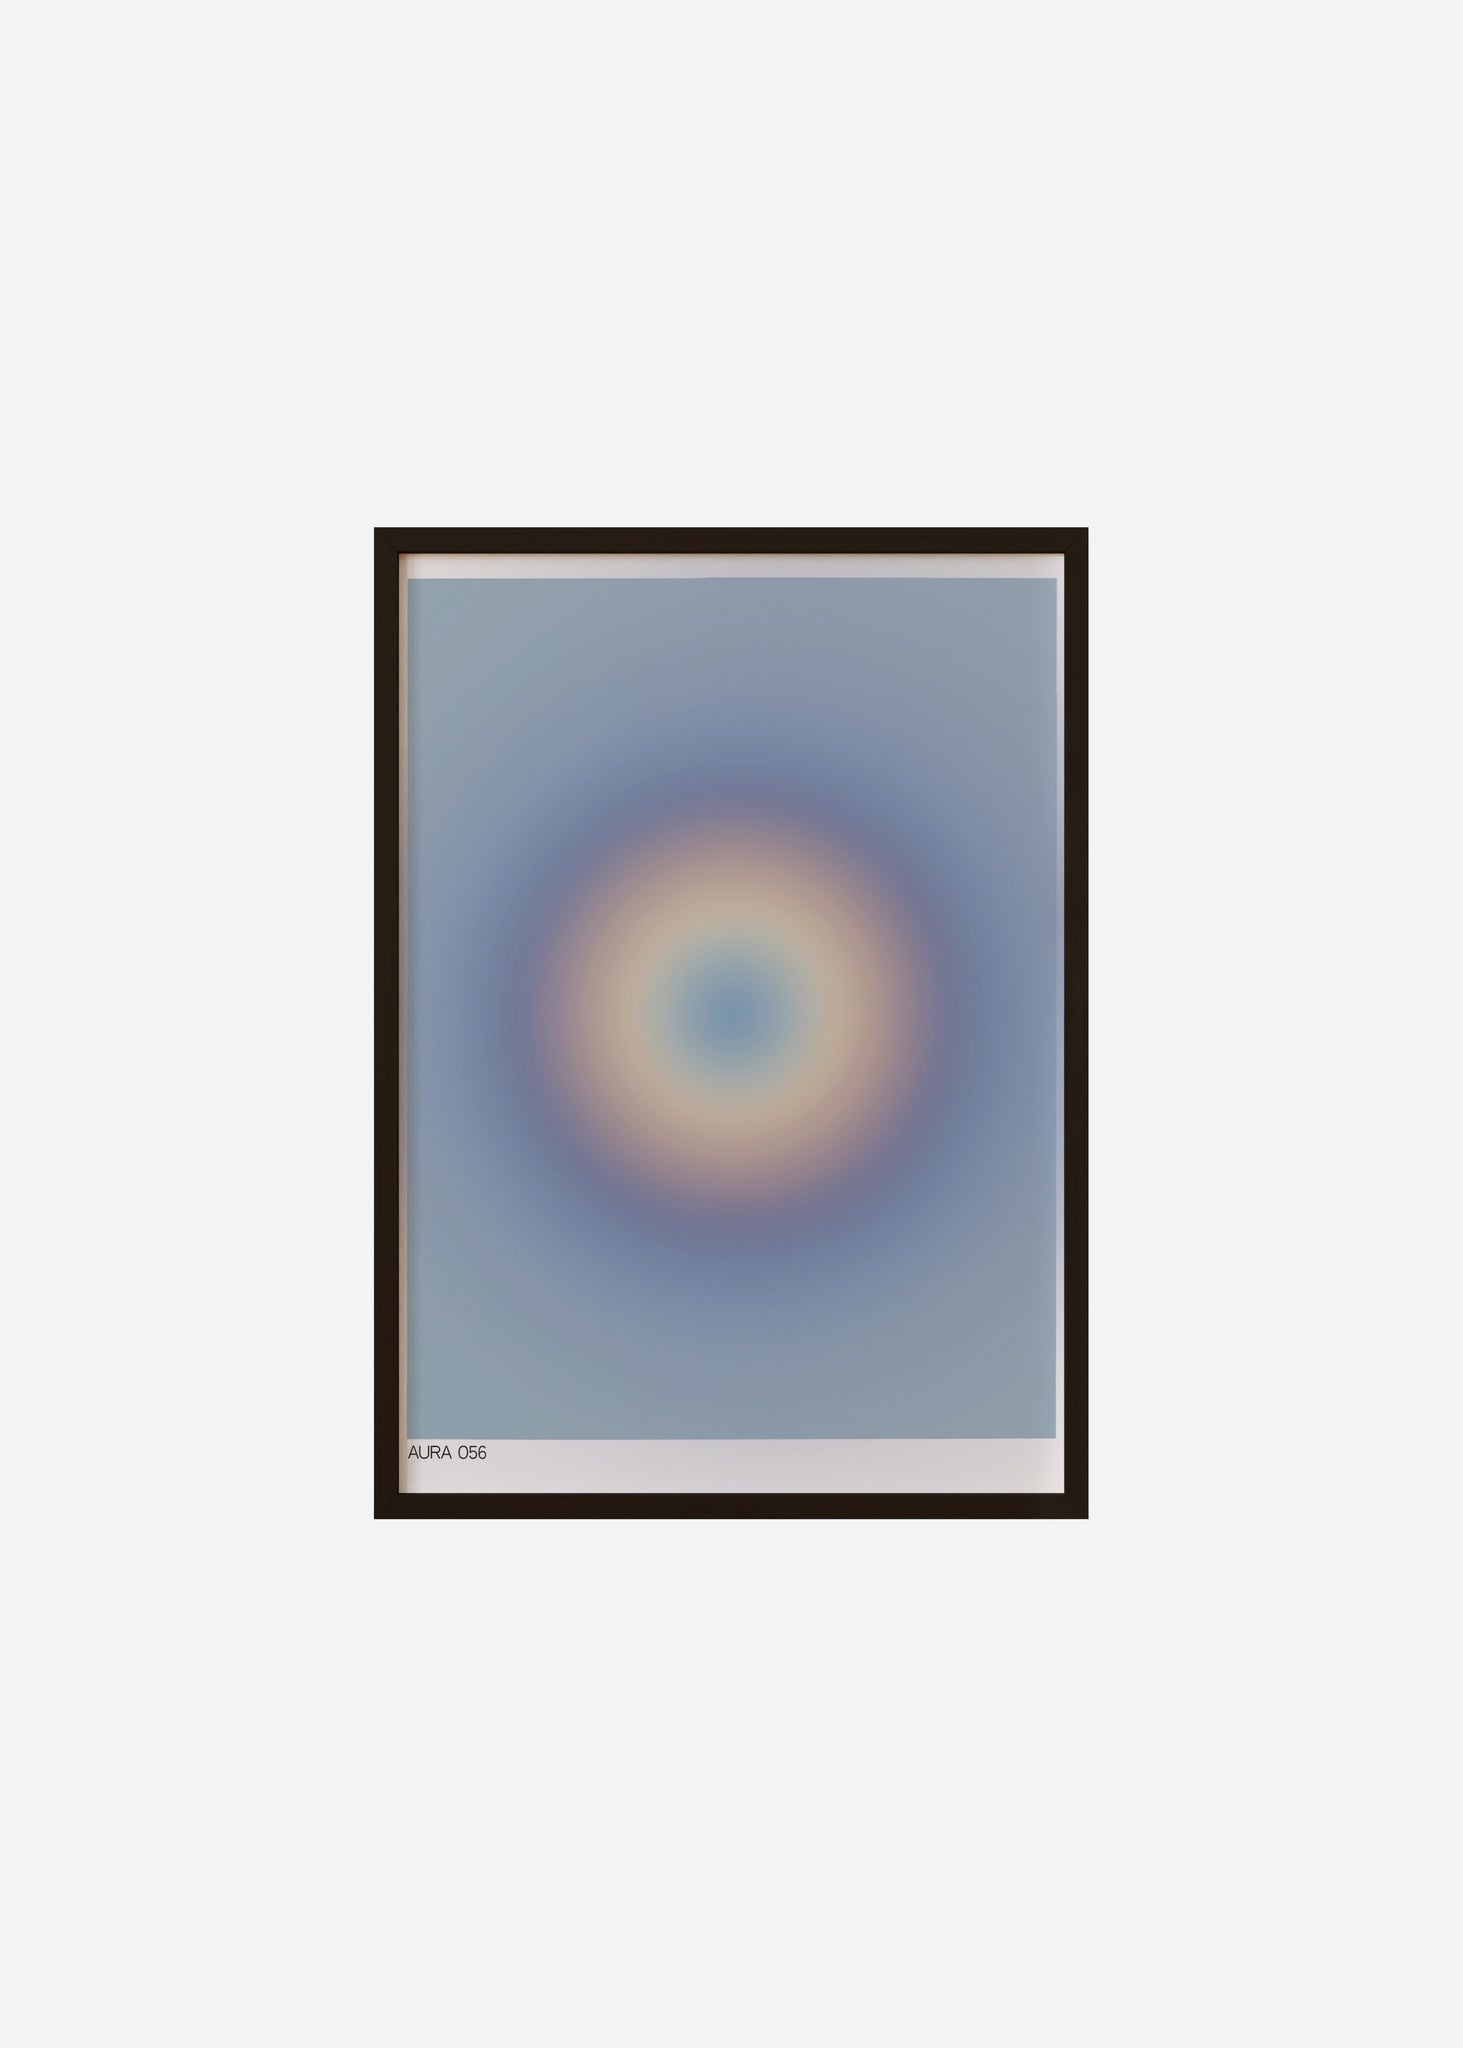 aura 056 Framed Print